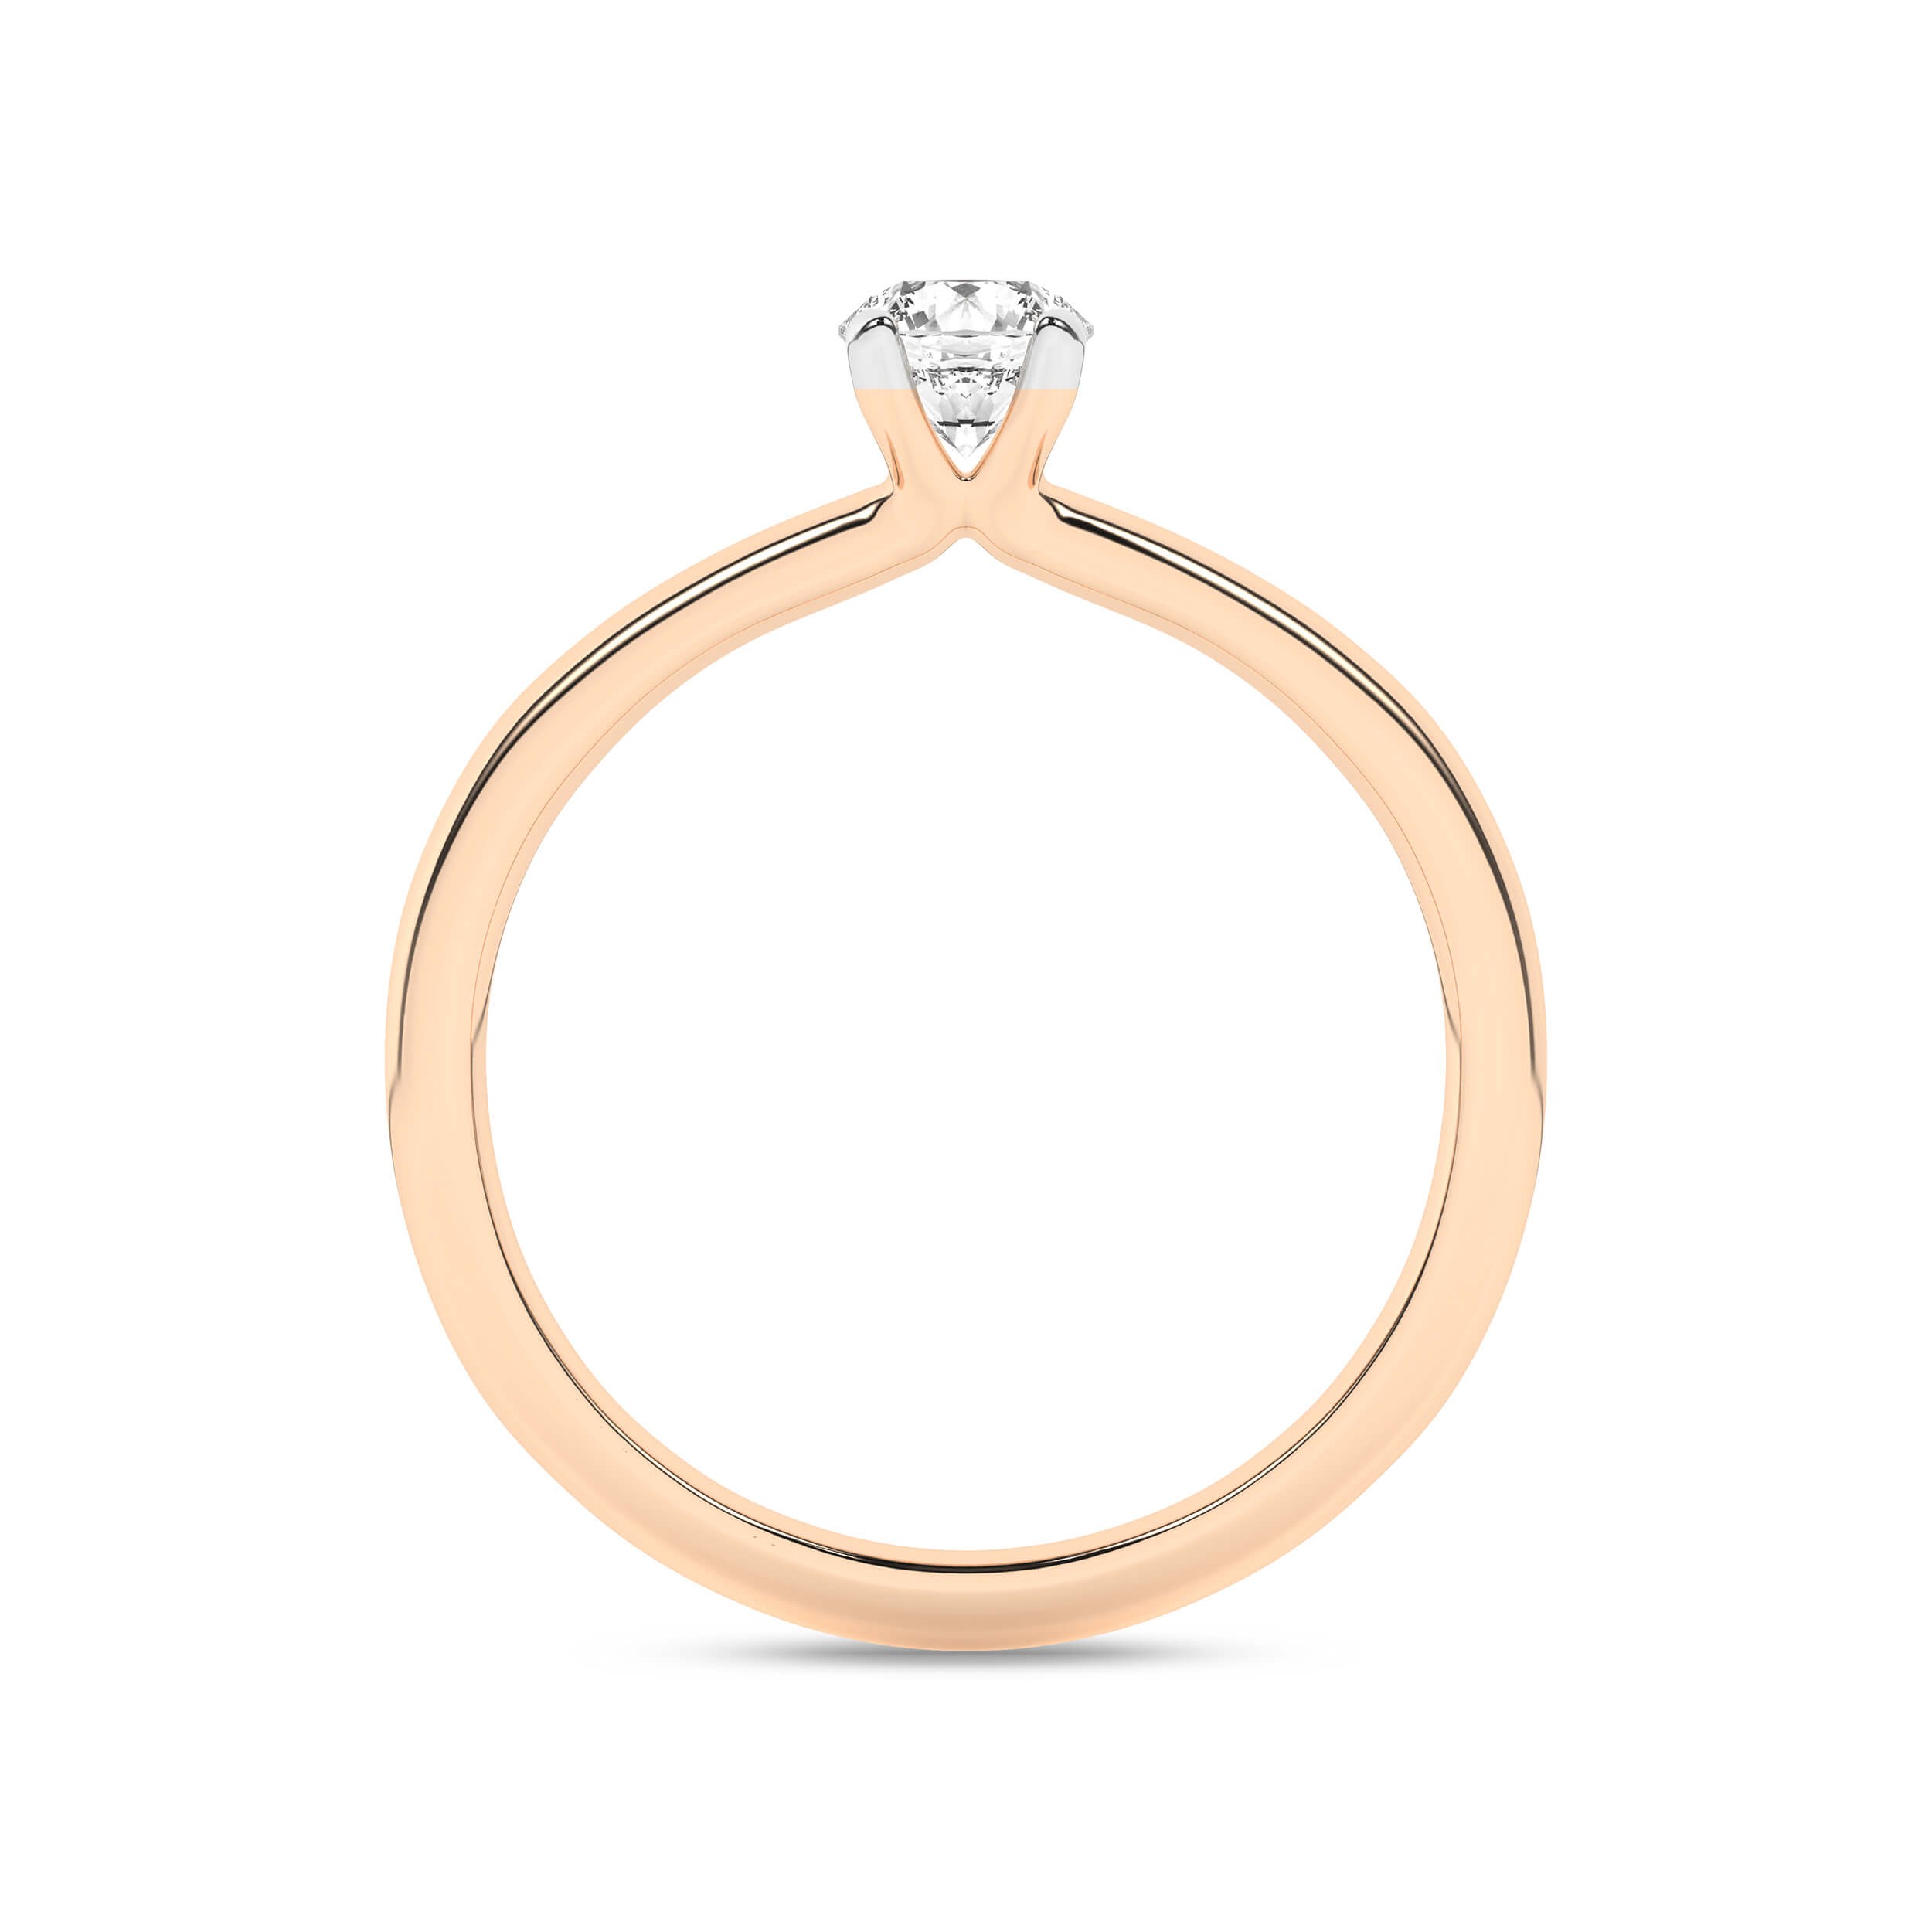 Inel de logodna din Aur Roz 14K cu Diamant 0.33Ct, articol RS0910, previzualizare foto 3